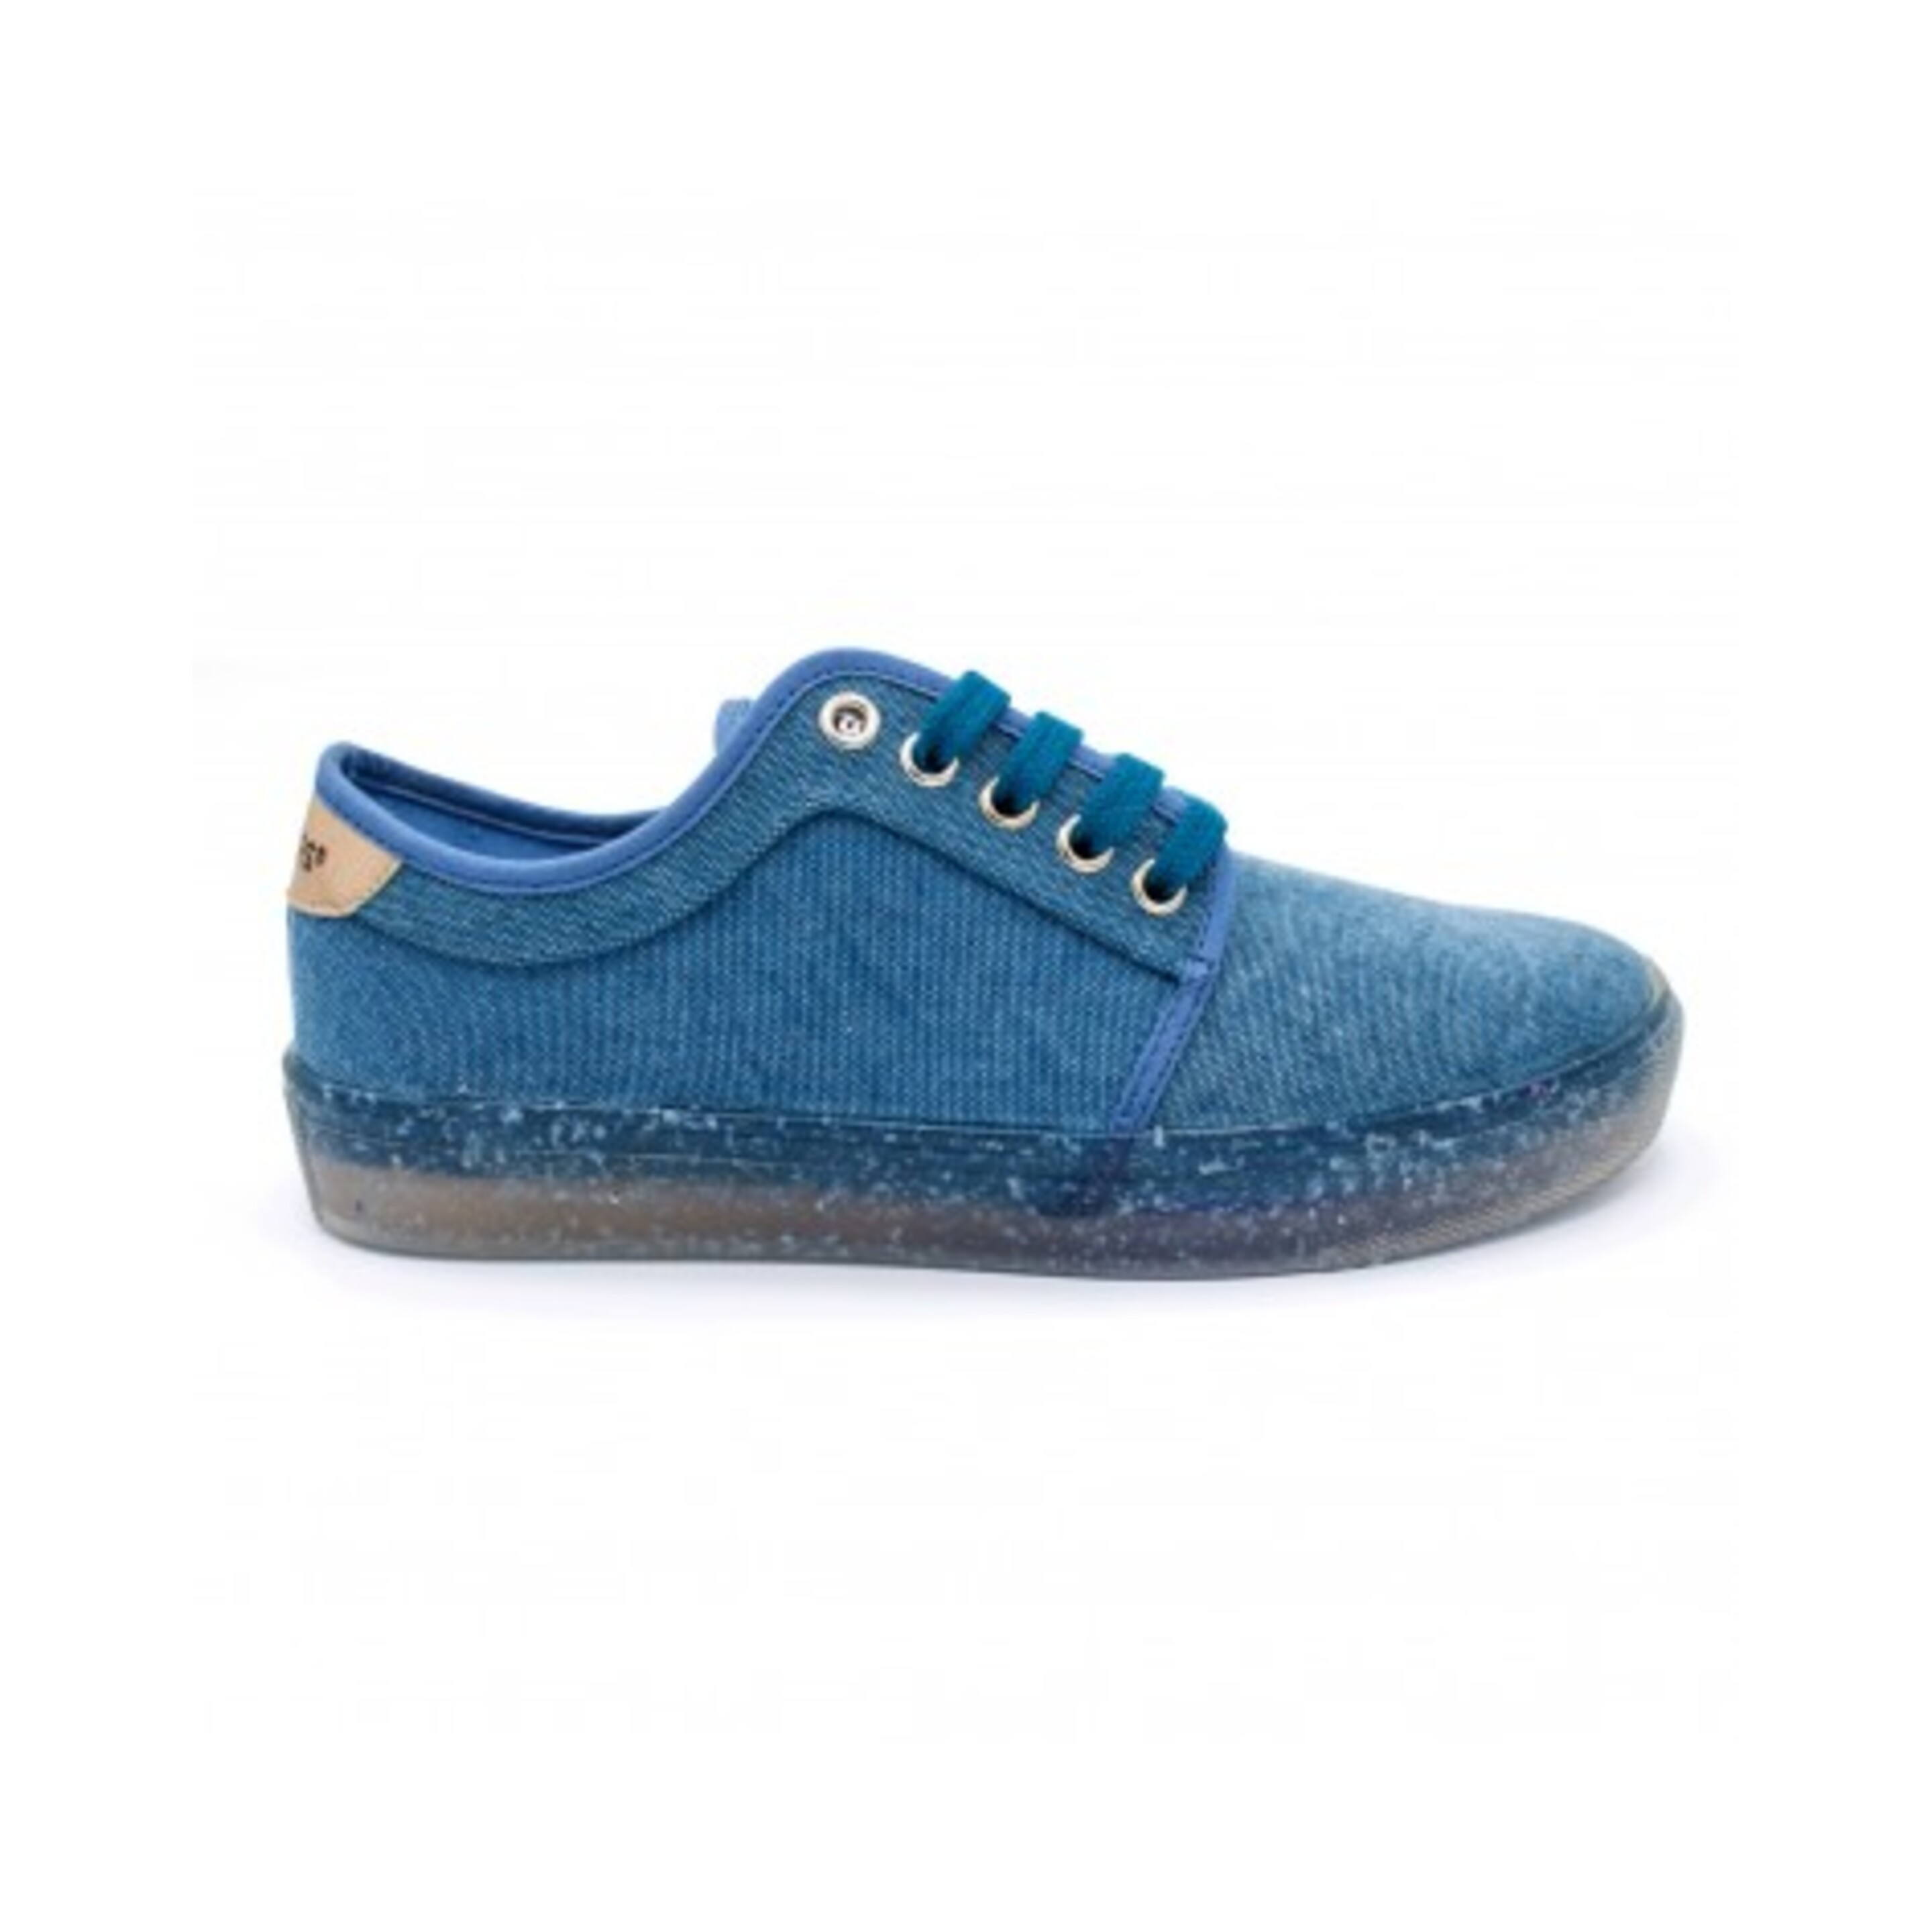 Sneaker Recykers Peckham - azul denim - Recycled Sneakers  MKP